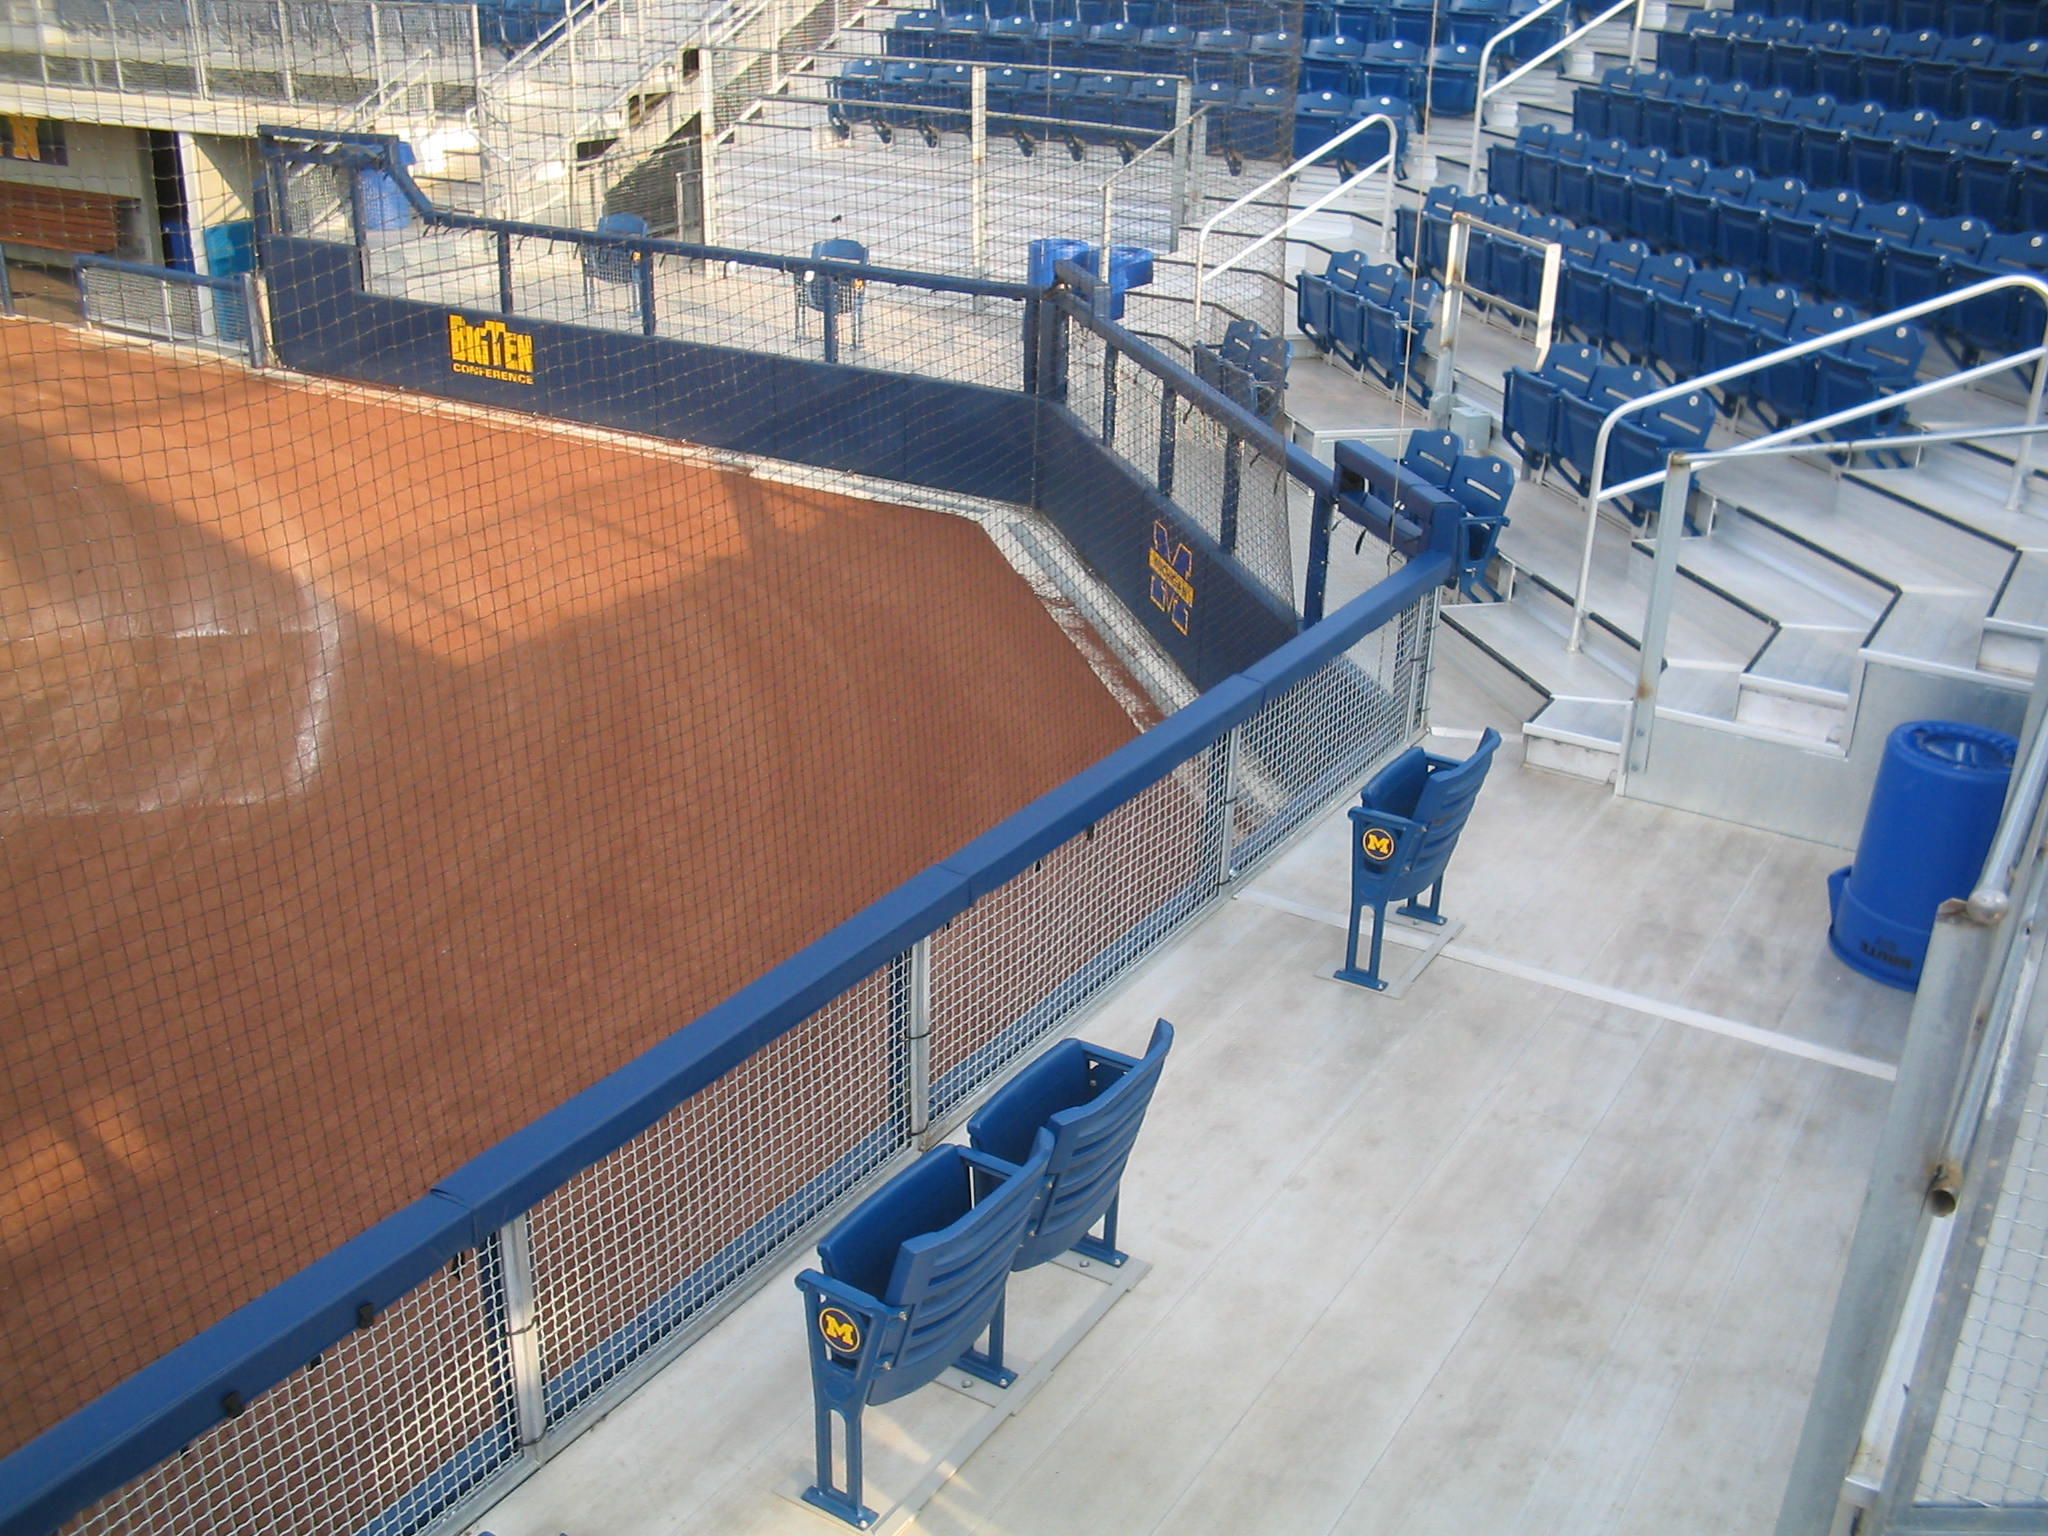 STADIUM WALL PADDING - C & H Baseball